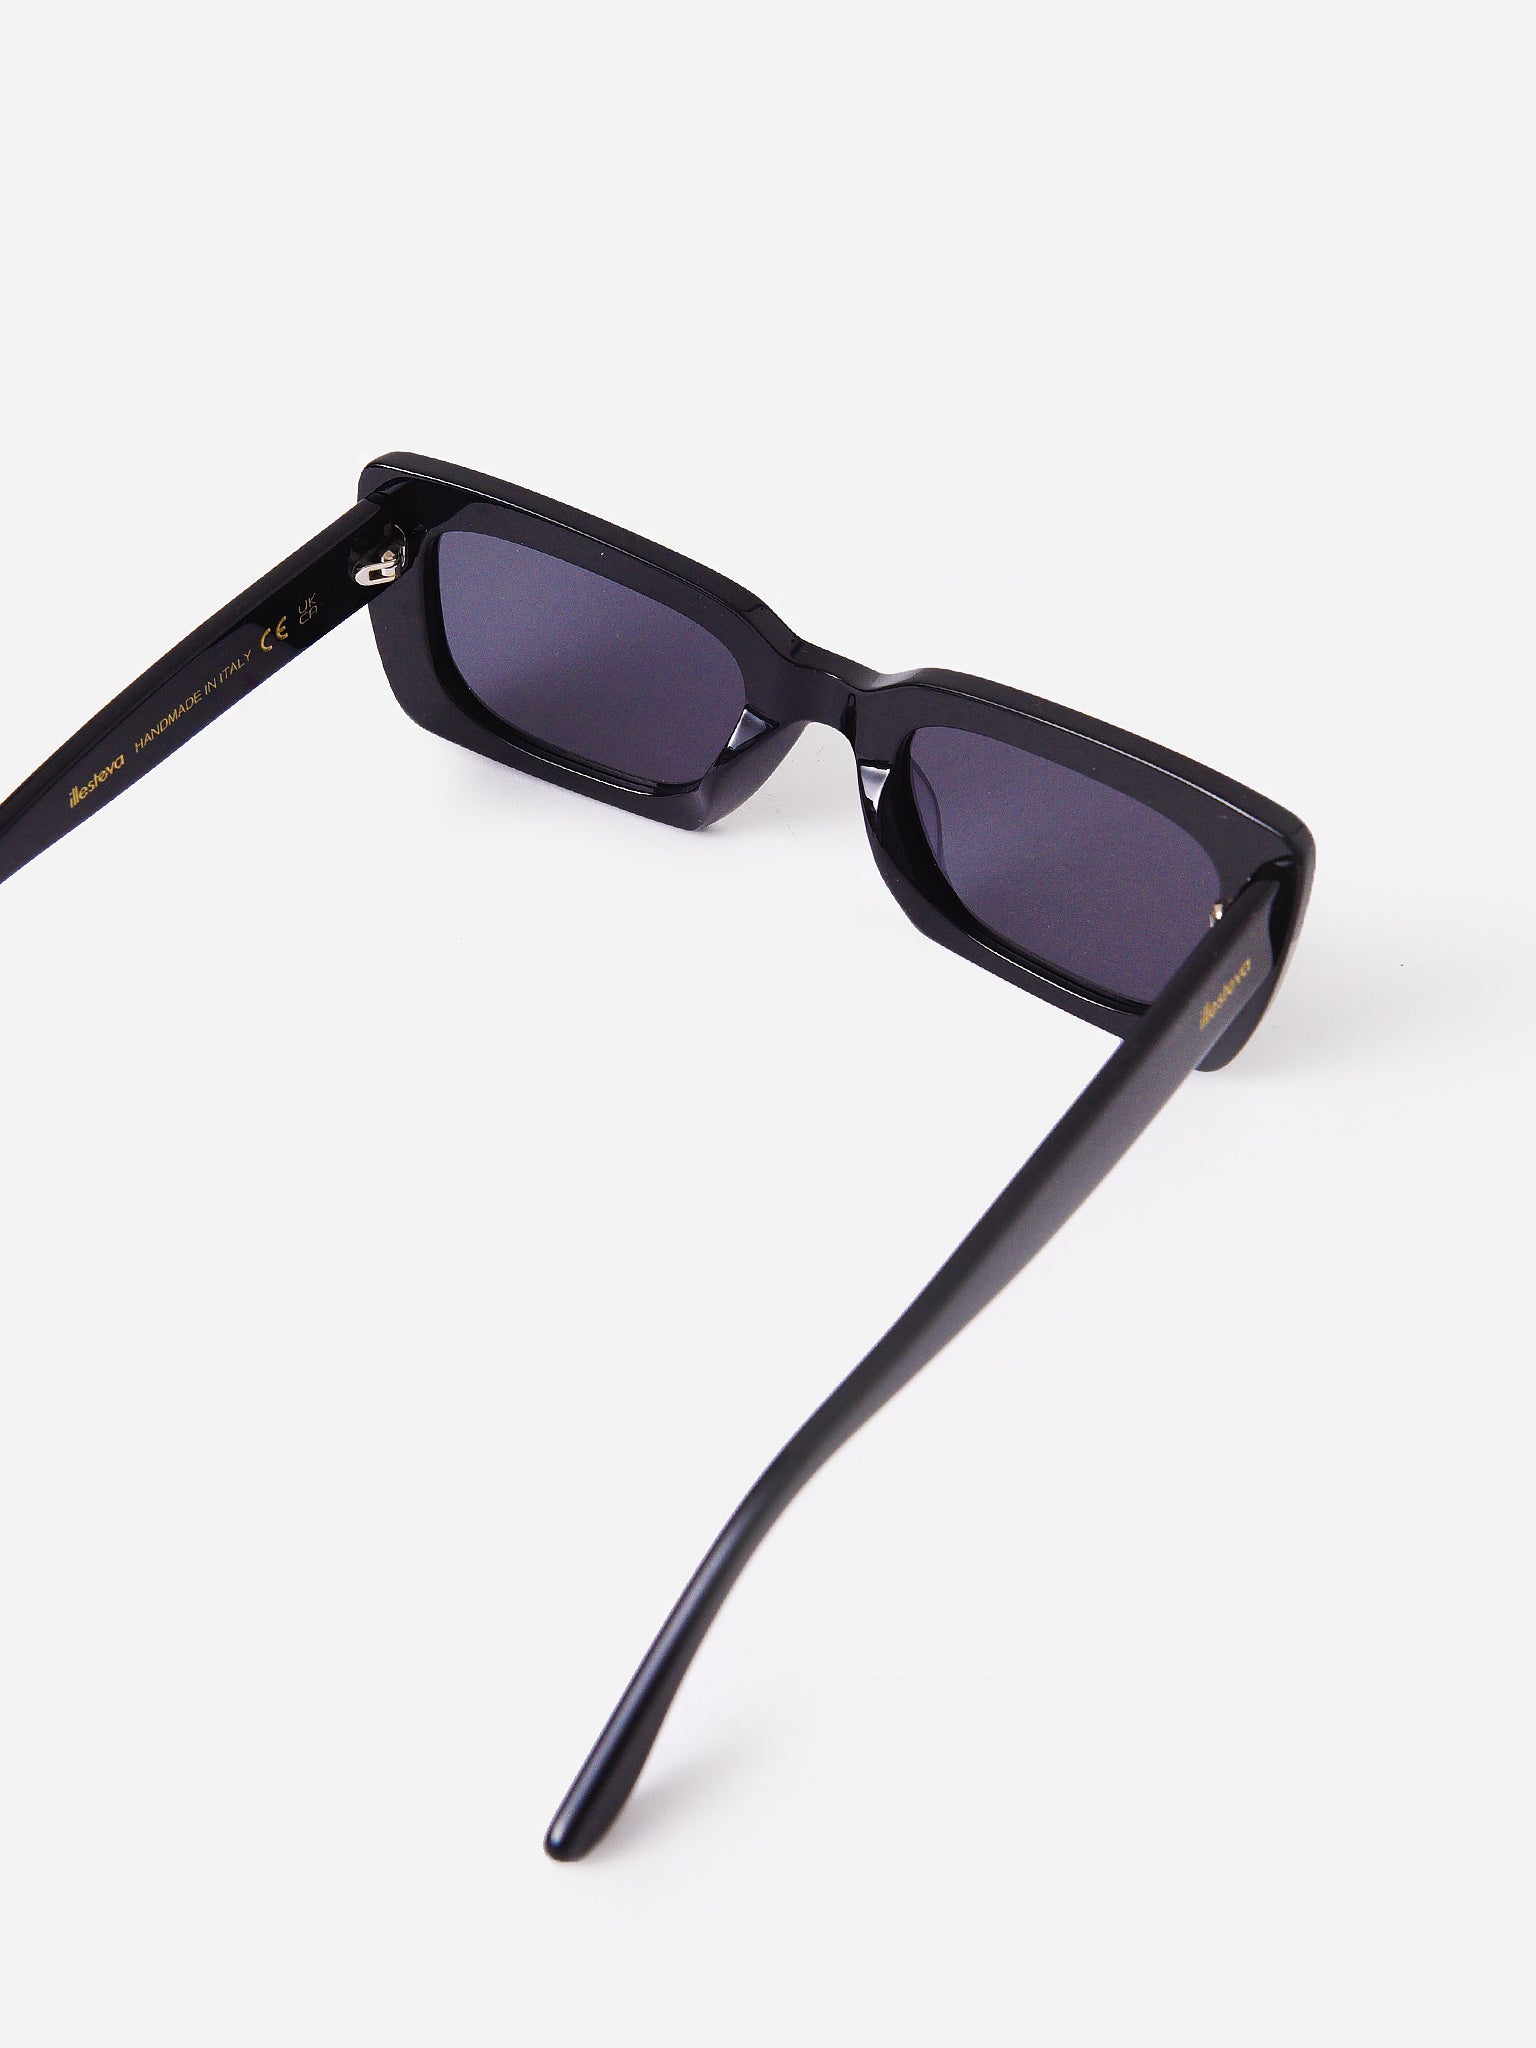 Designer Unisex Illesteva Sunglasses With Flower Lens For Travel And Beach  Black/Grey From Fashion6516, $20.03